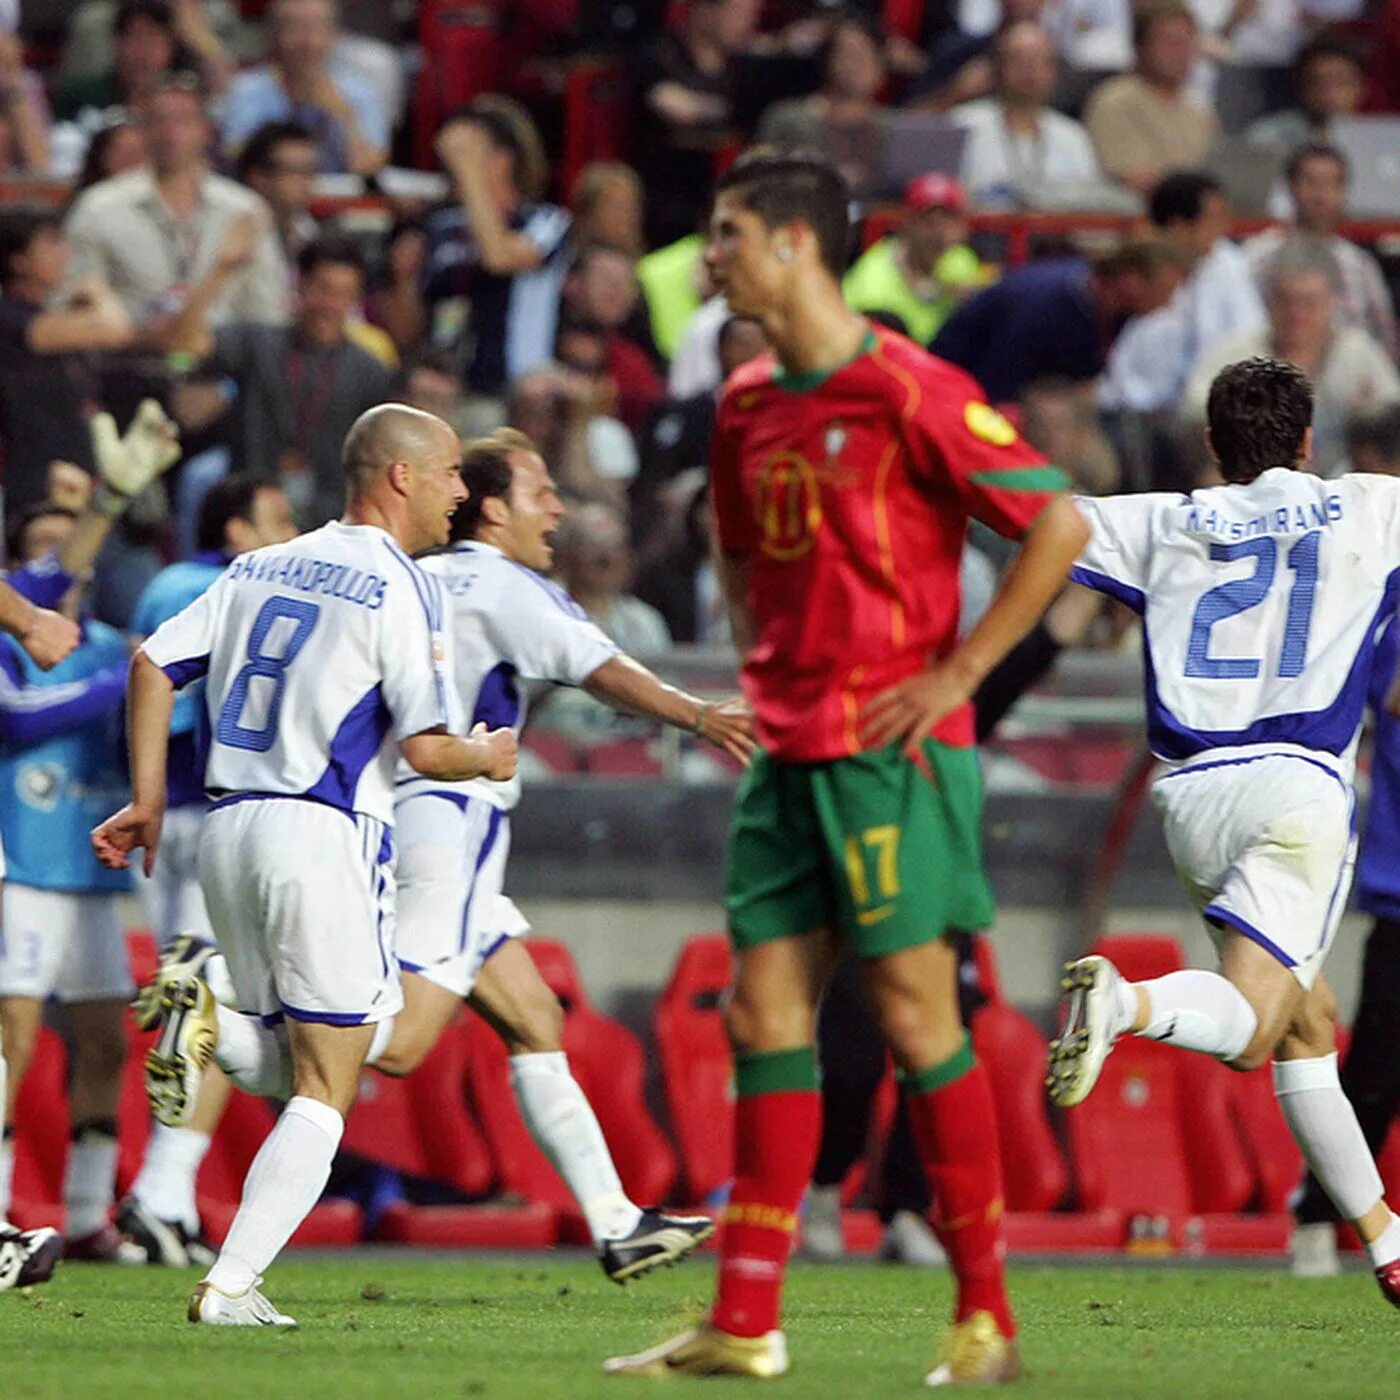 Че 2004 финал. Португалия Греция евро 2004 финал. Сборная Греции чемпион Европы 2004. Сборная Греции евро 2004.